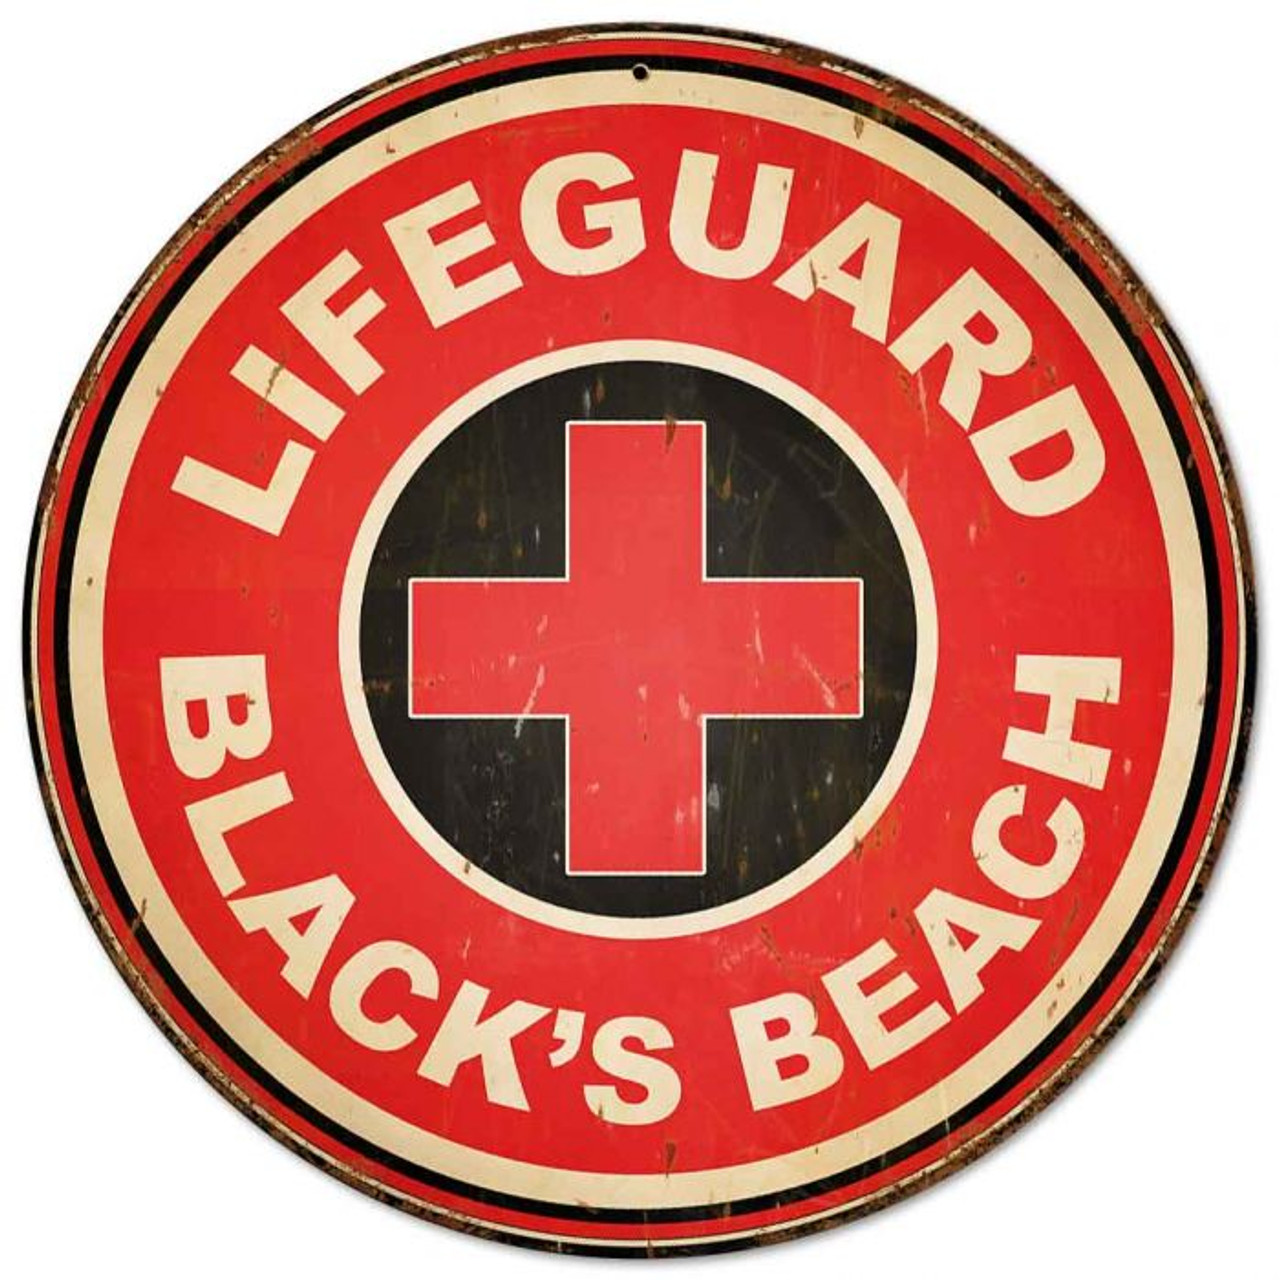 Lifeguard Blacks Beach Vintage Metal Sign 14 x 14 inches